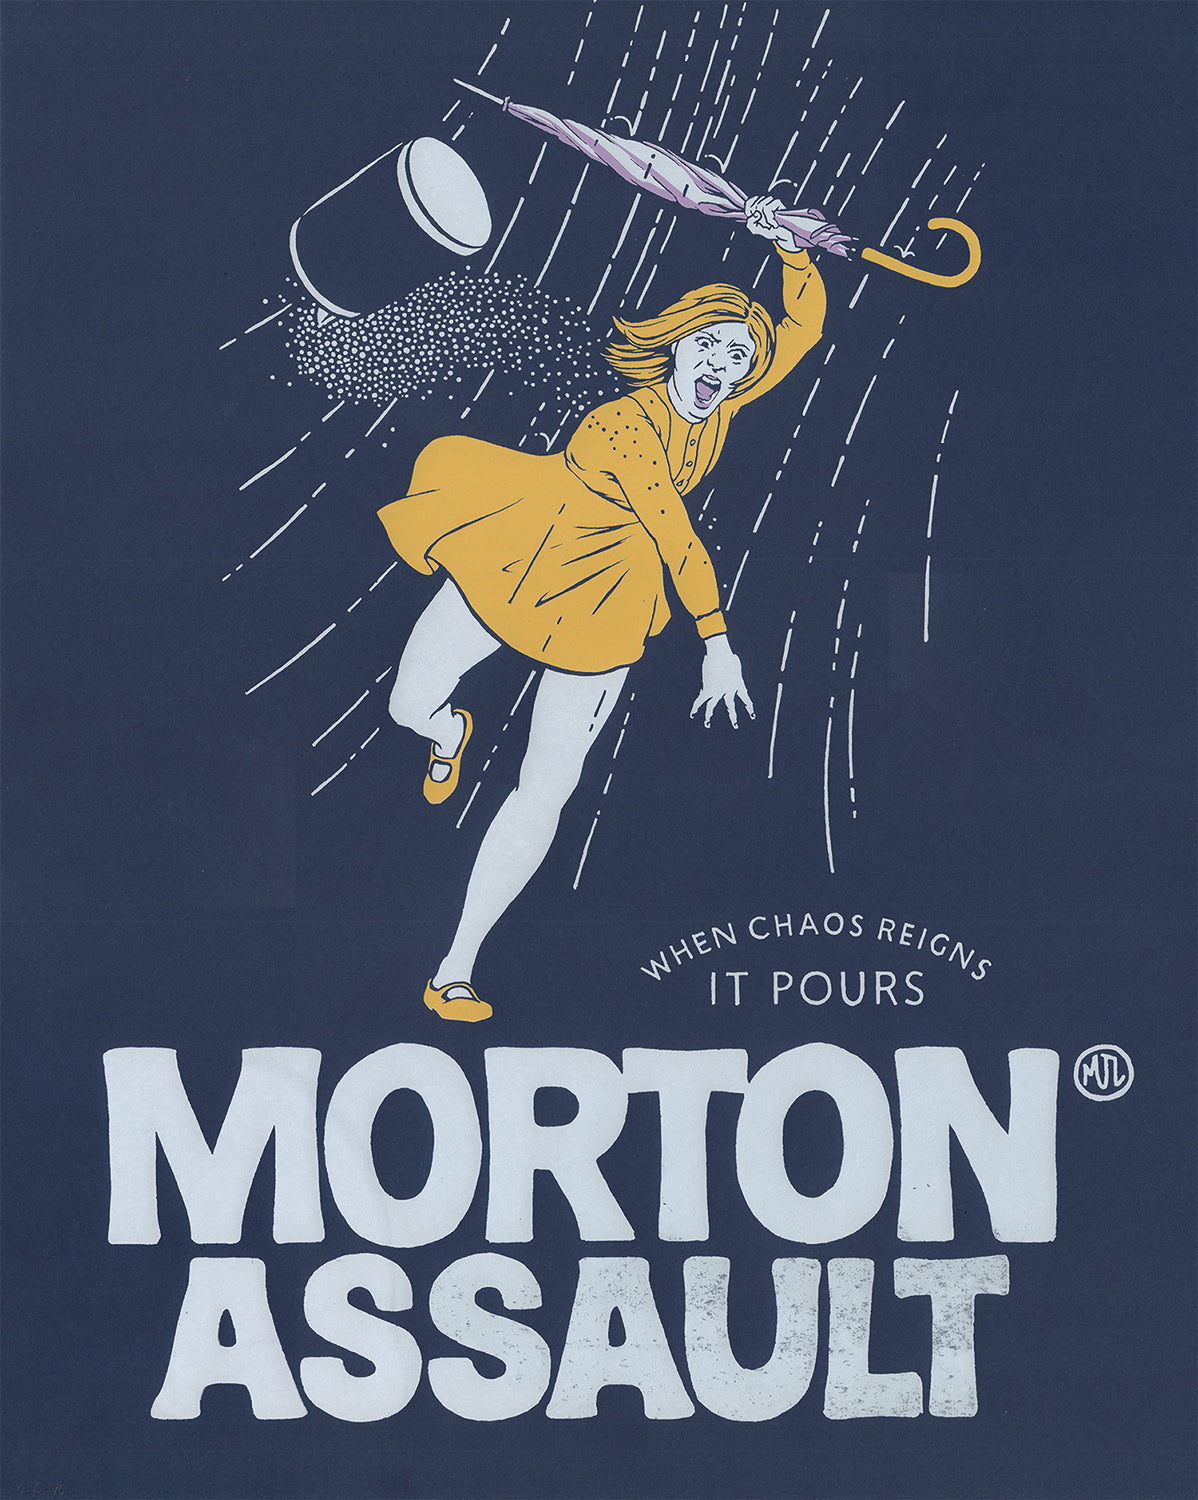 "Morton Assault" by Michael Lauritano